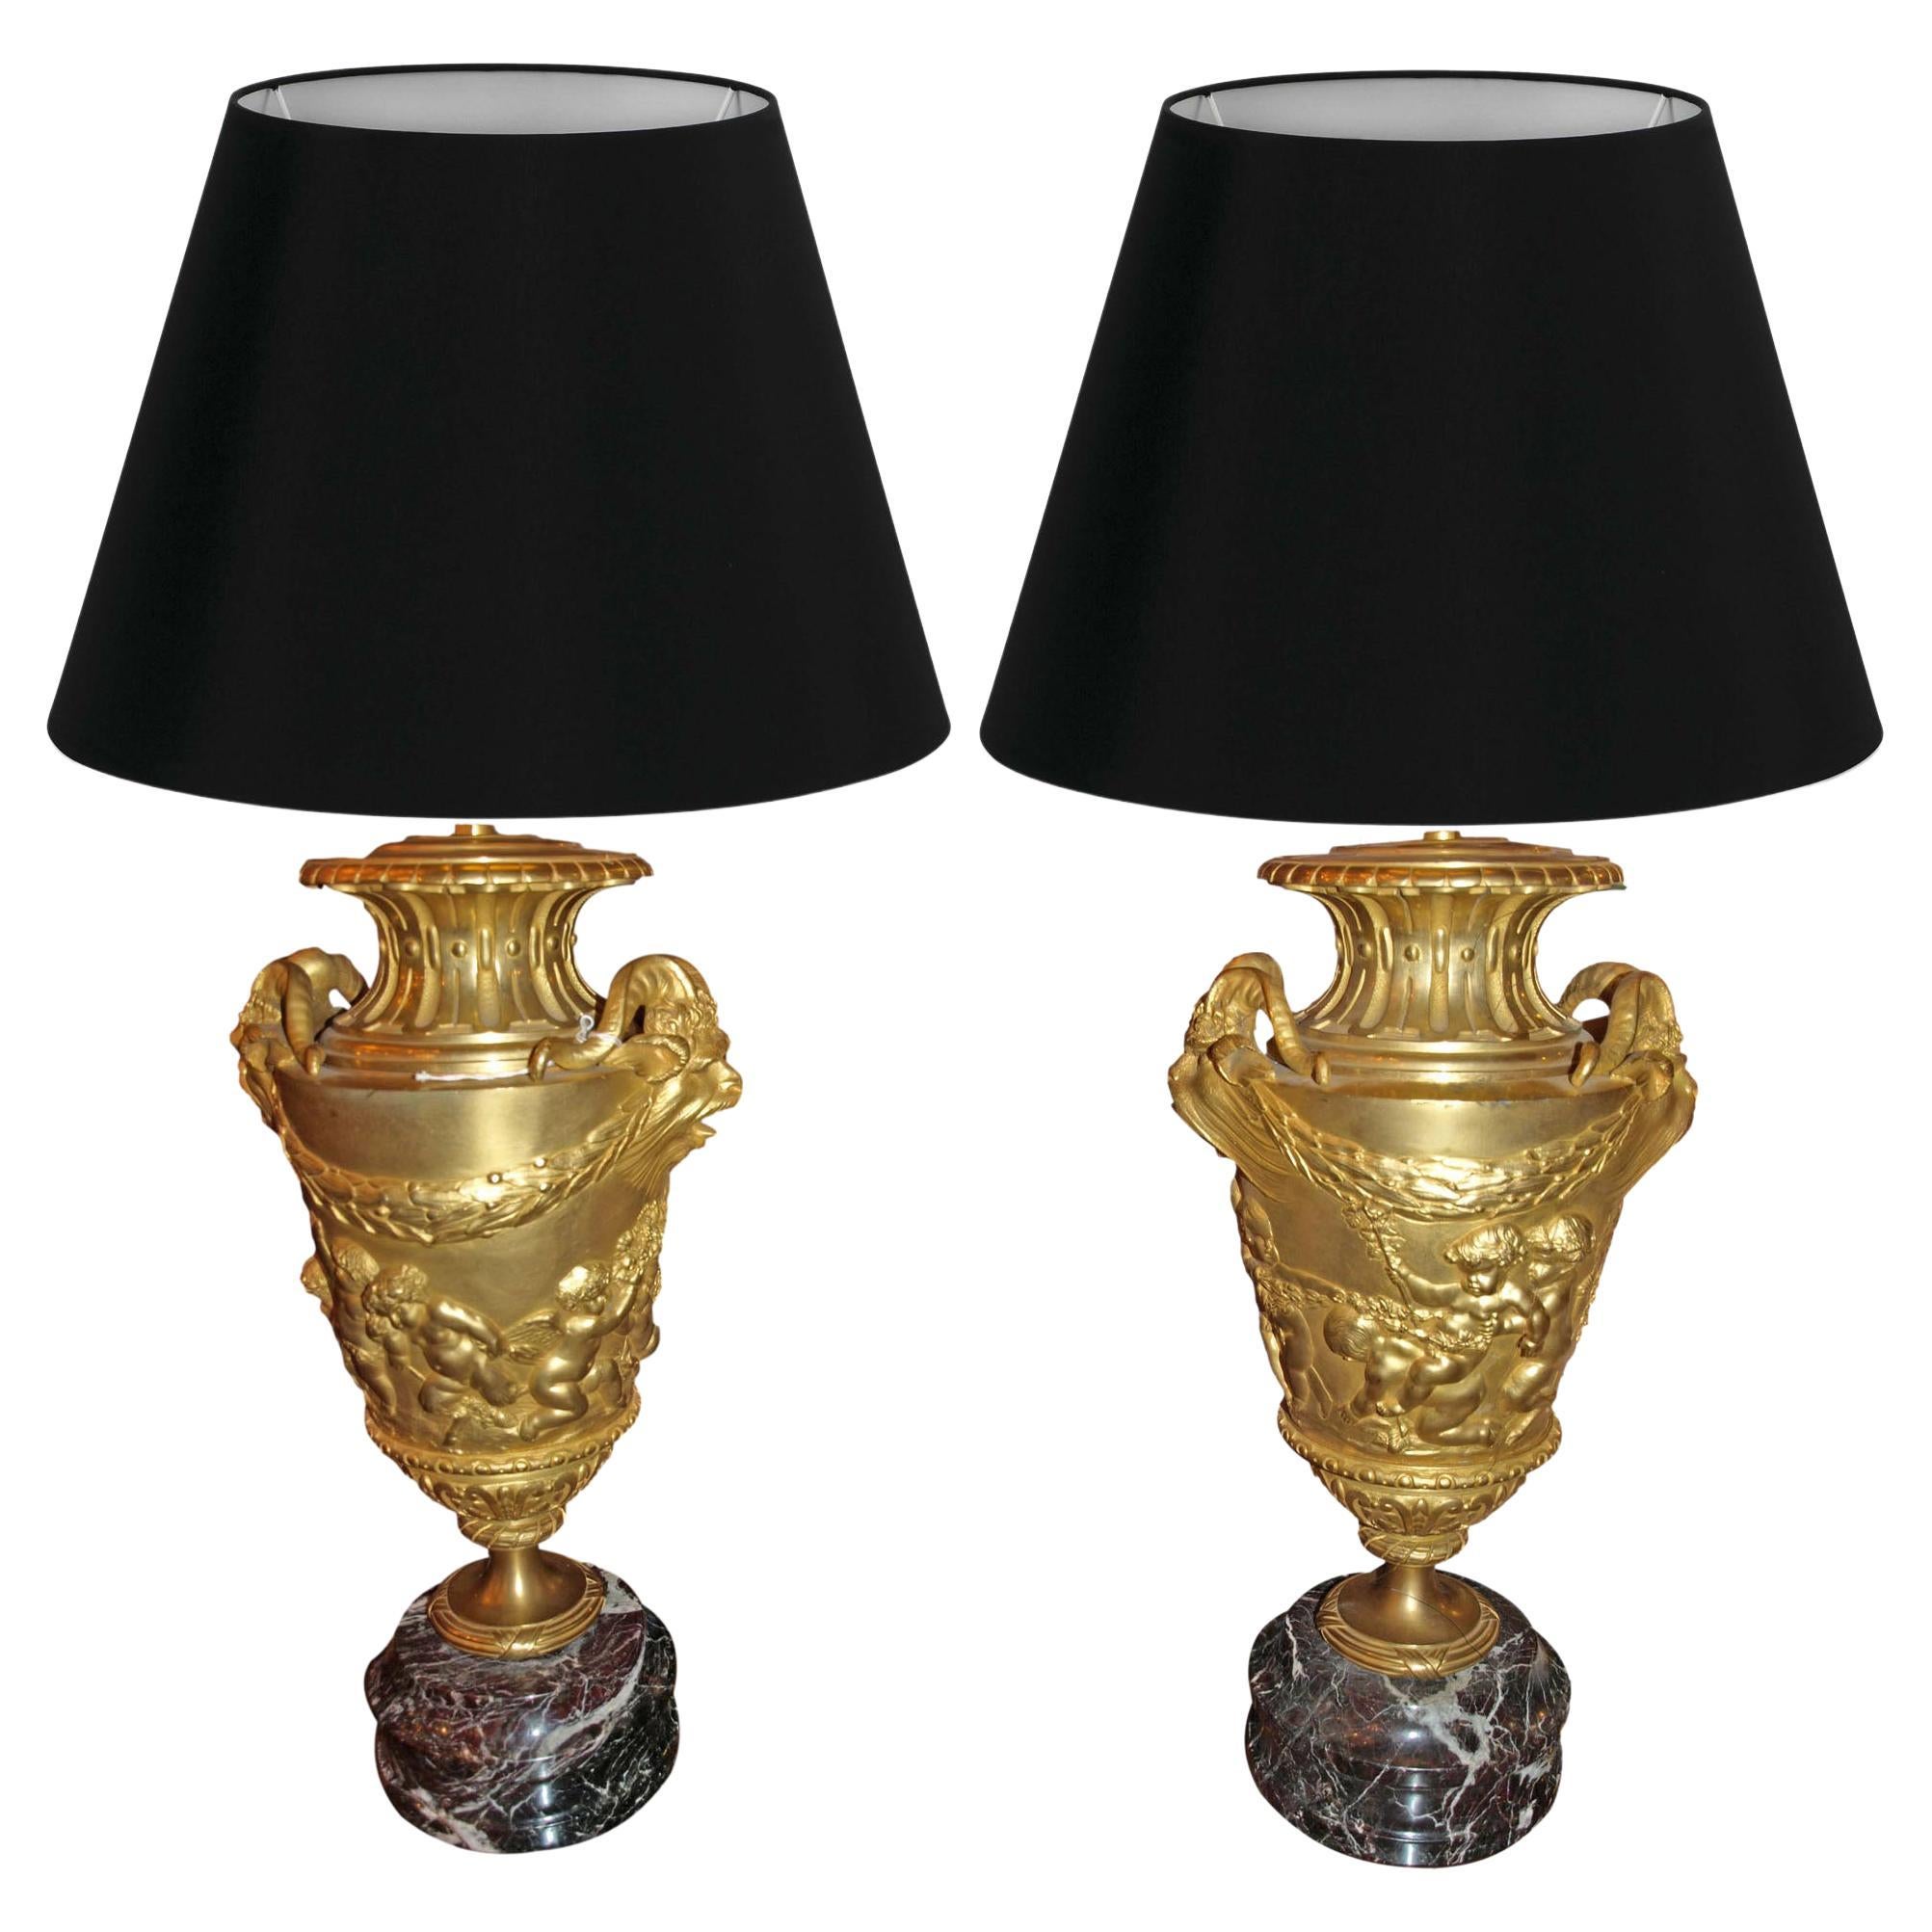 Pair of Gilt Bronze Lamps